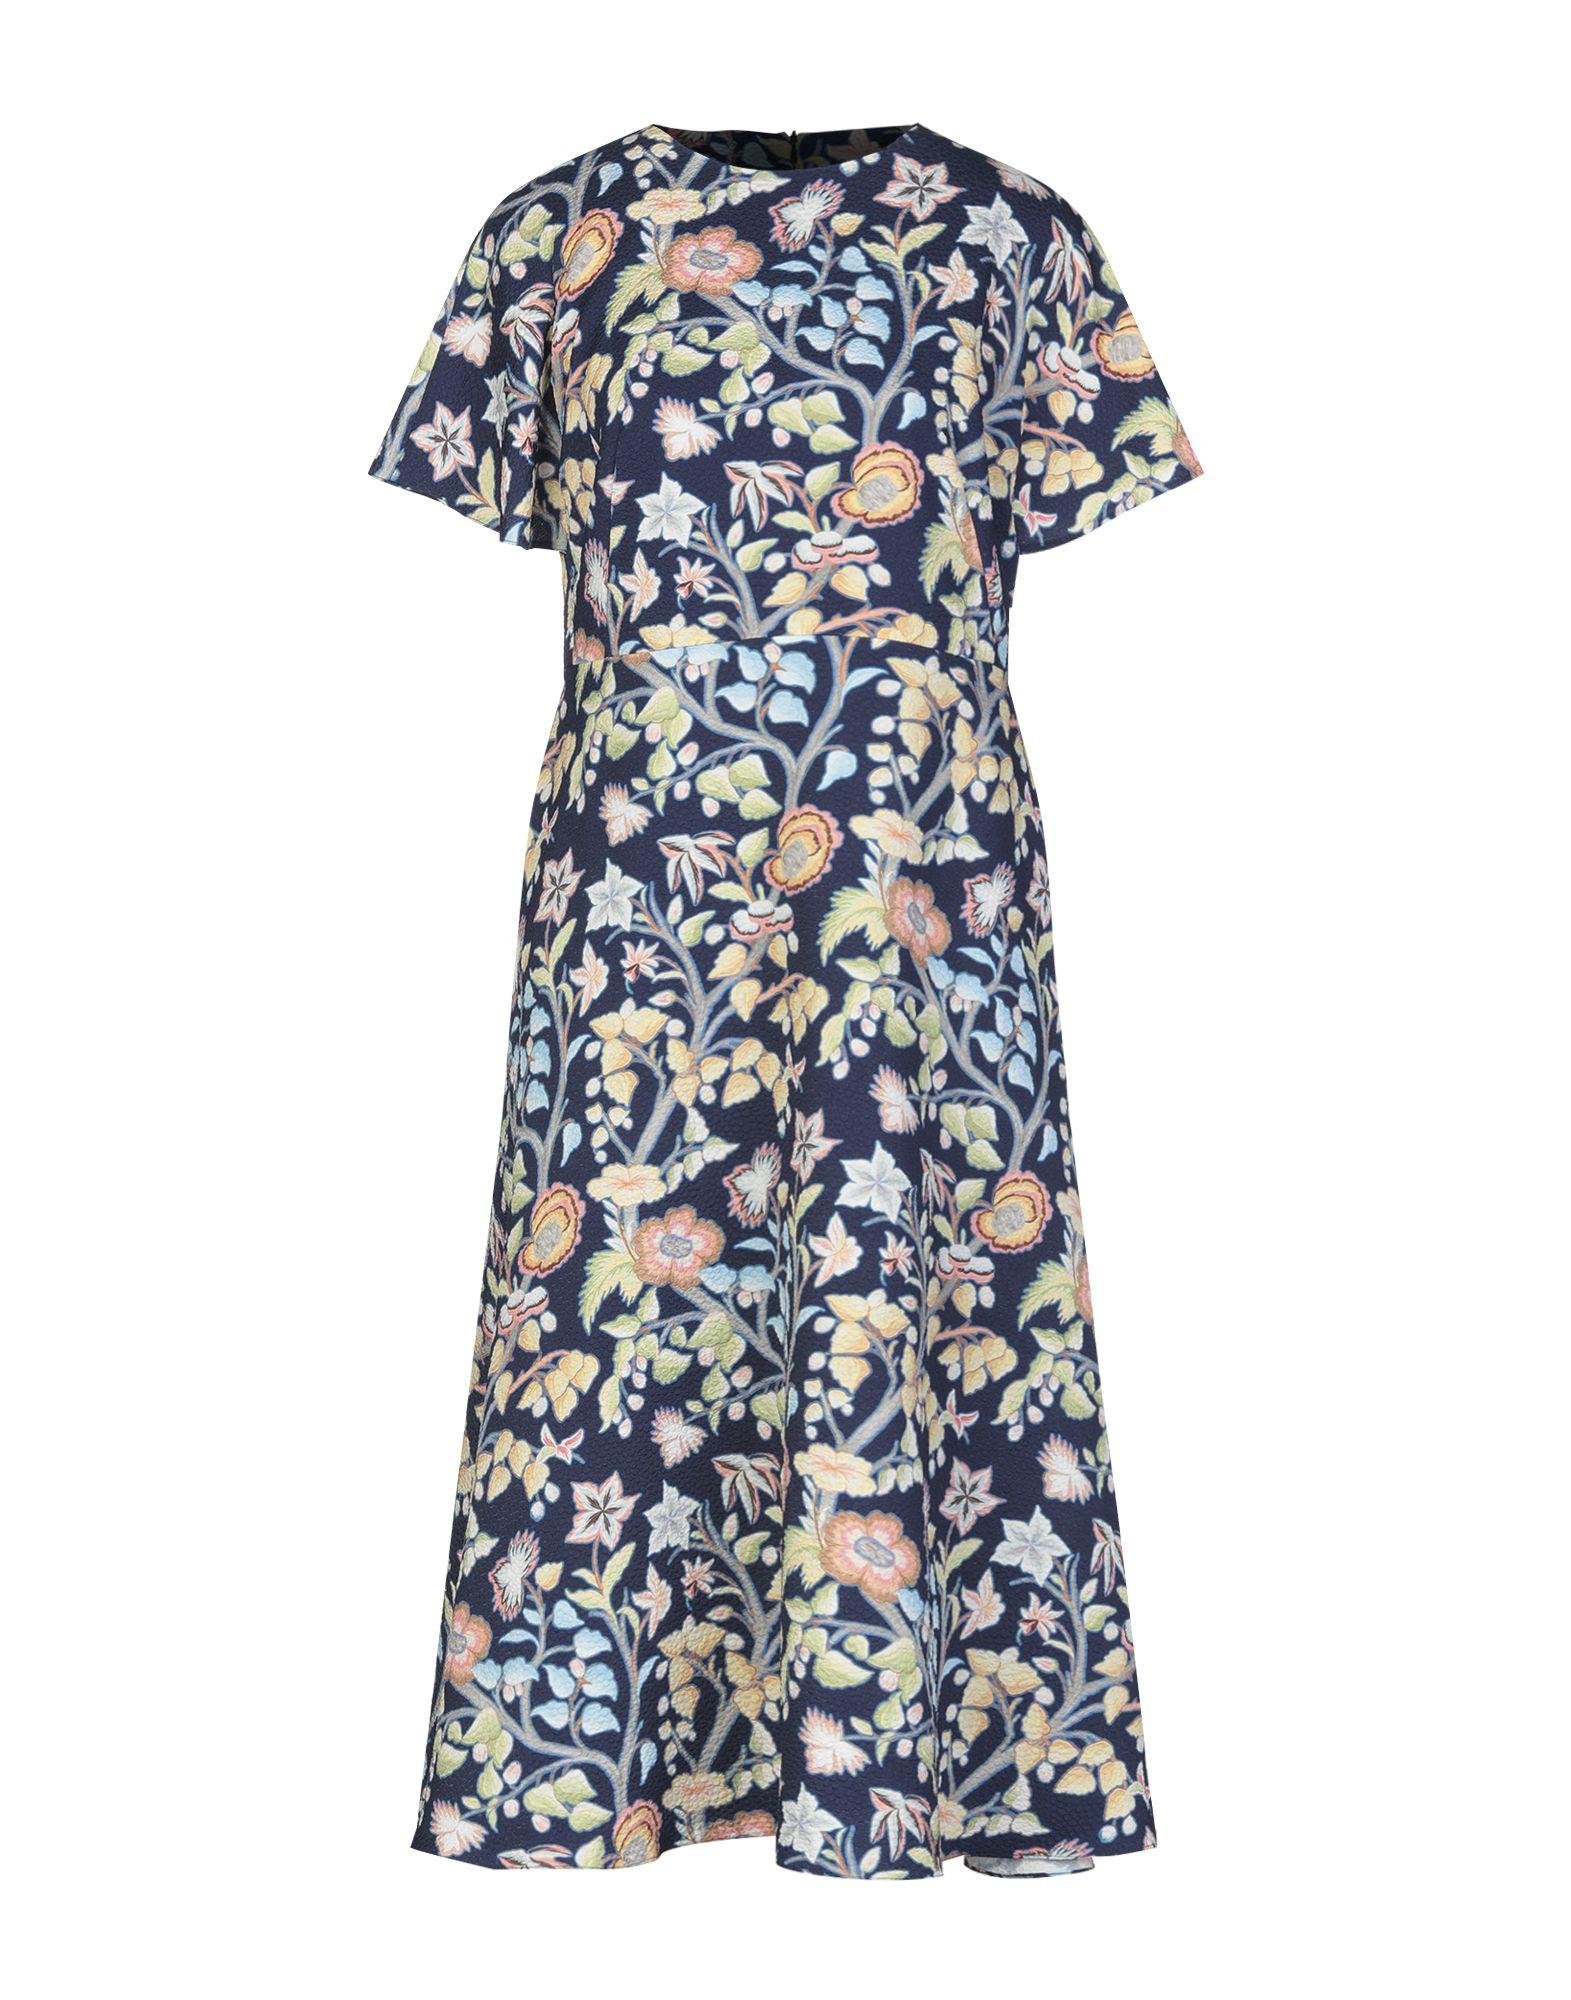 Peter Pilotto Floral-Print Midi Dress.jpeg